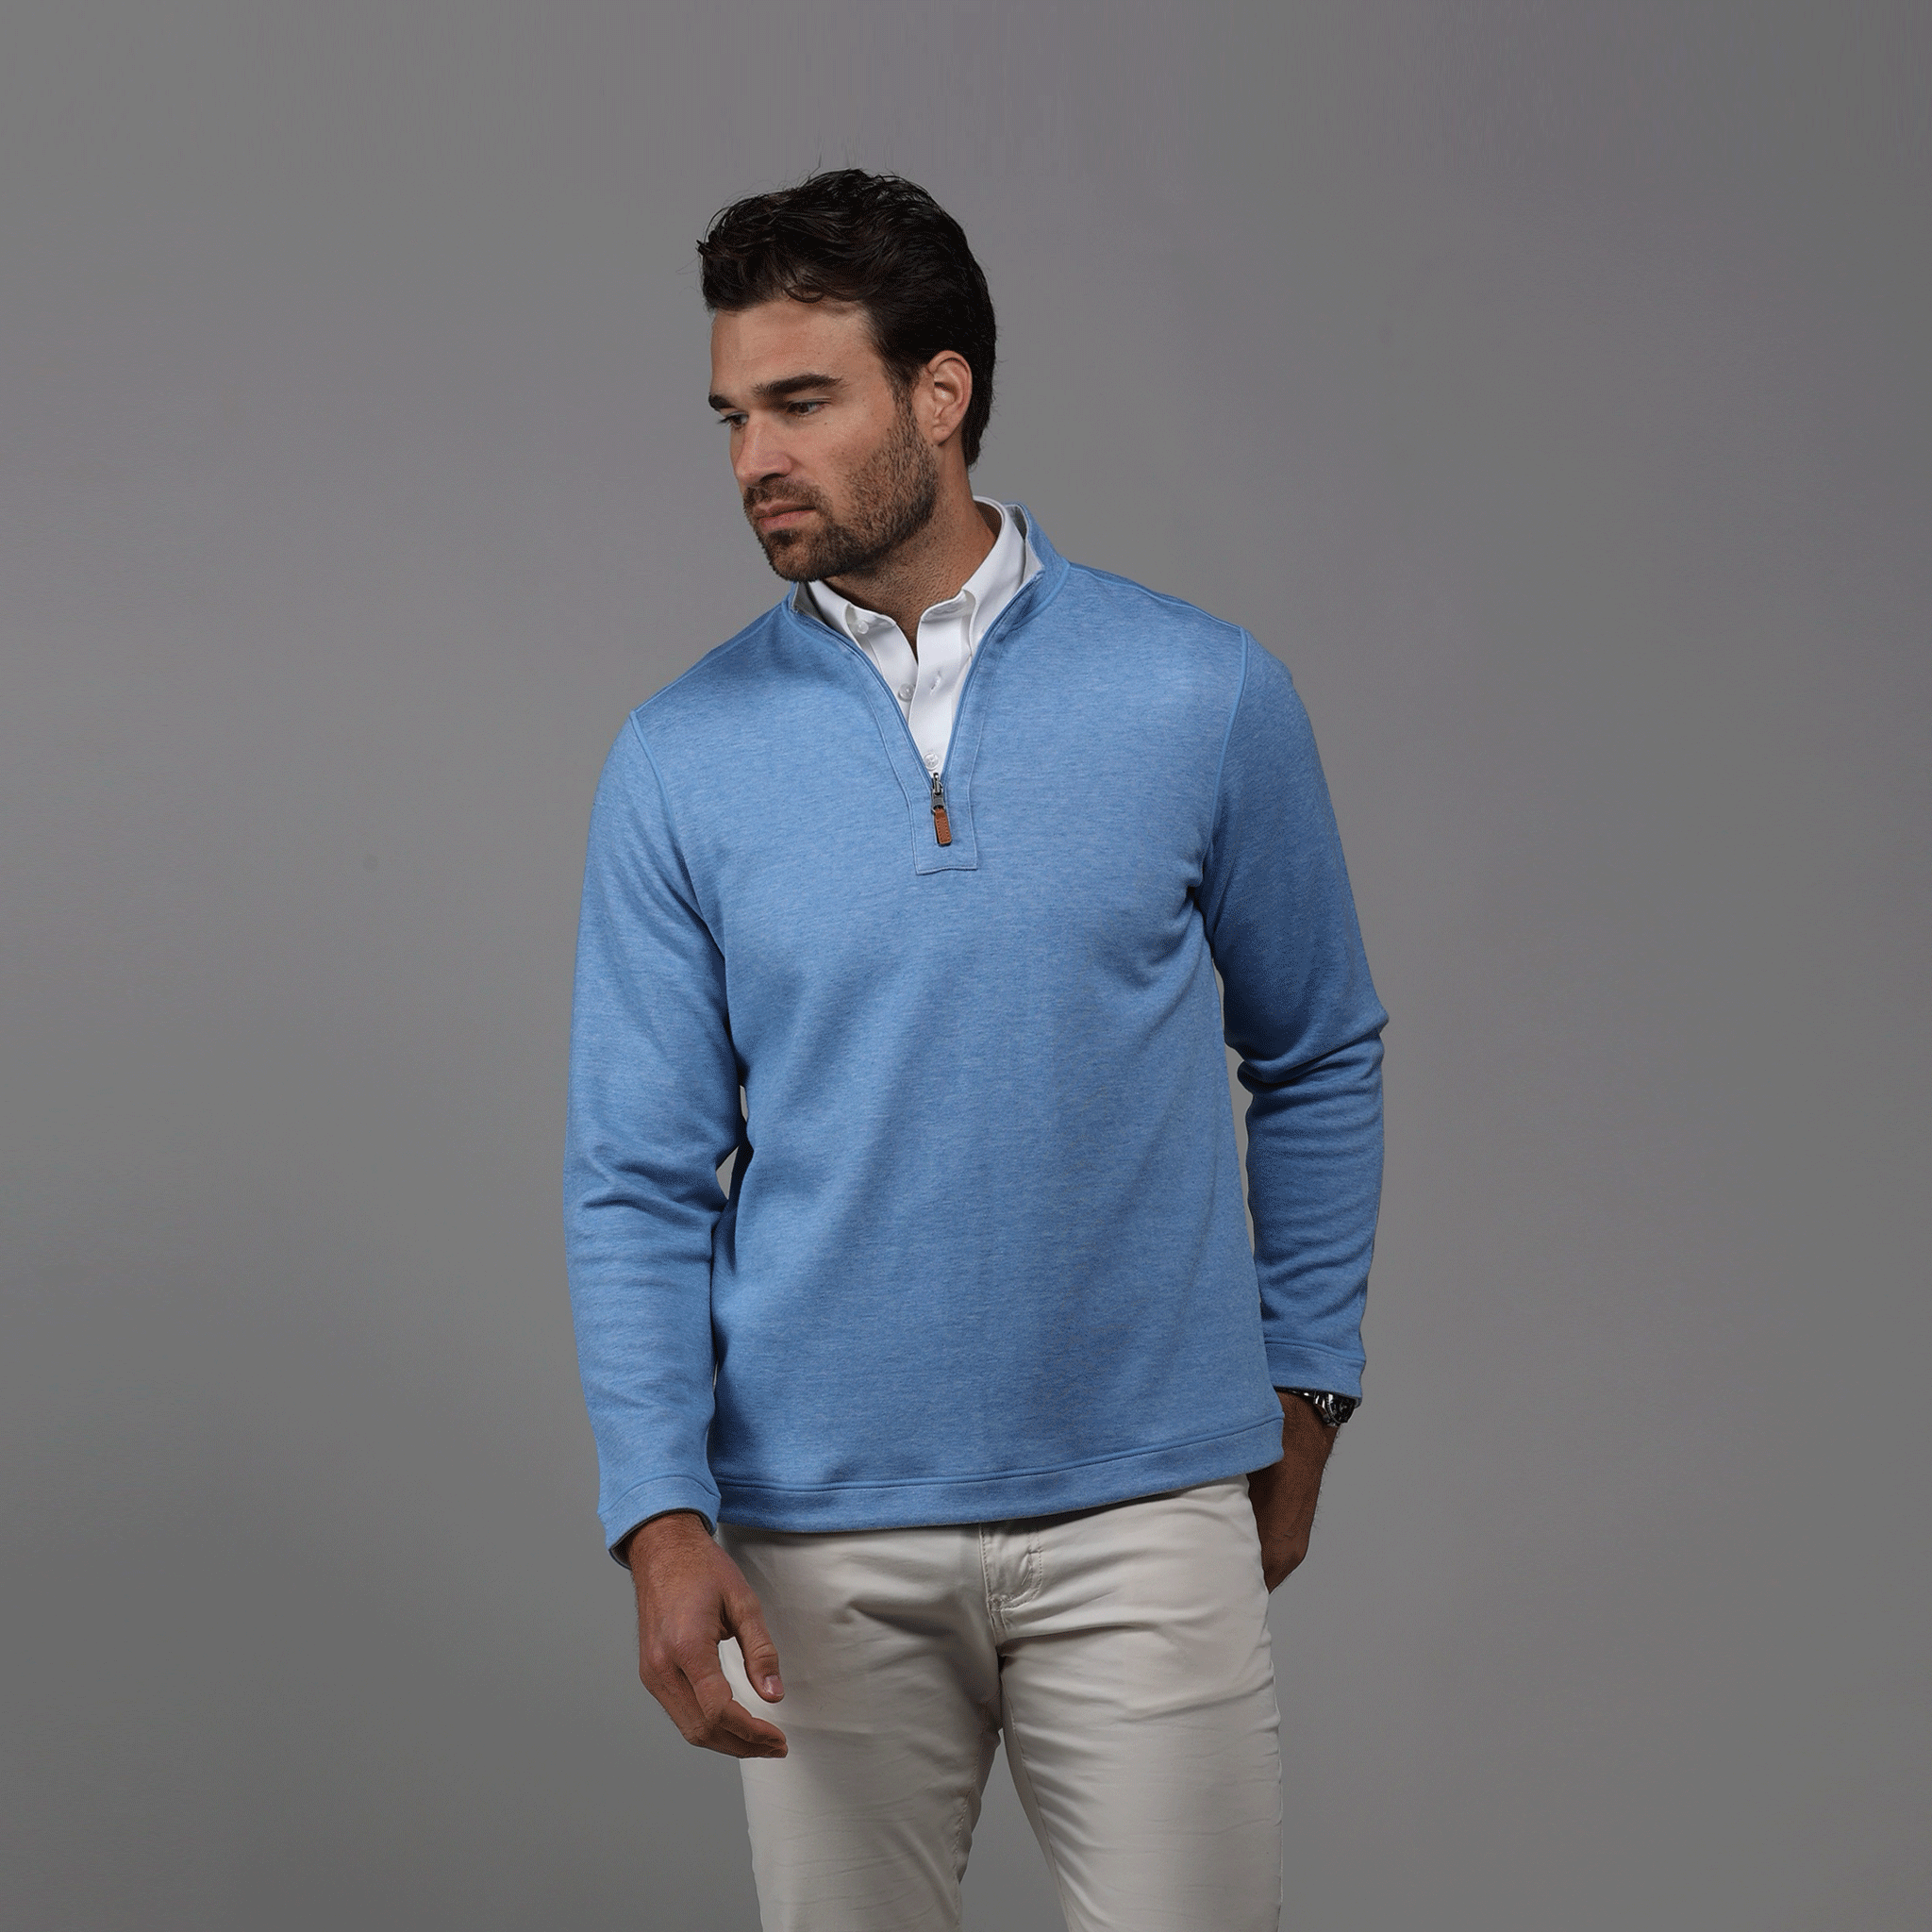 Sky Blue and Light Reversible Zen Blend Grey & Quarter Zip Cotton Pullov – Collars